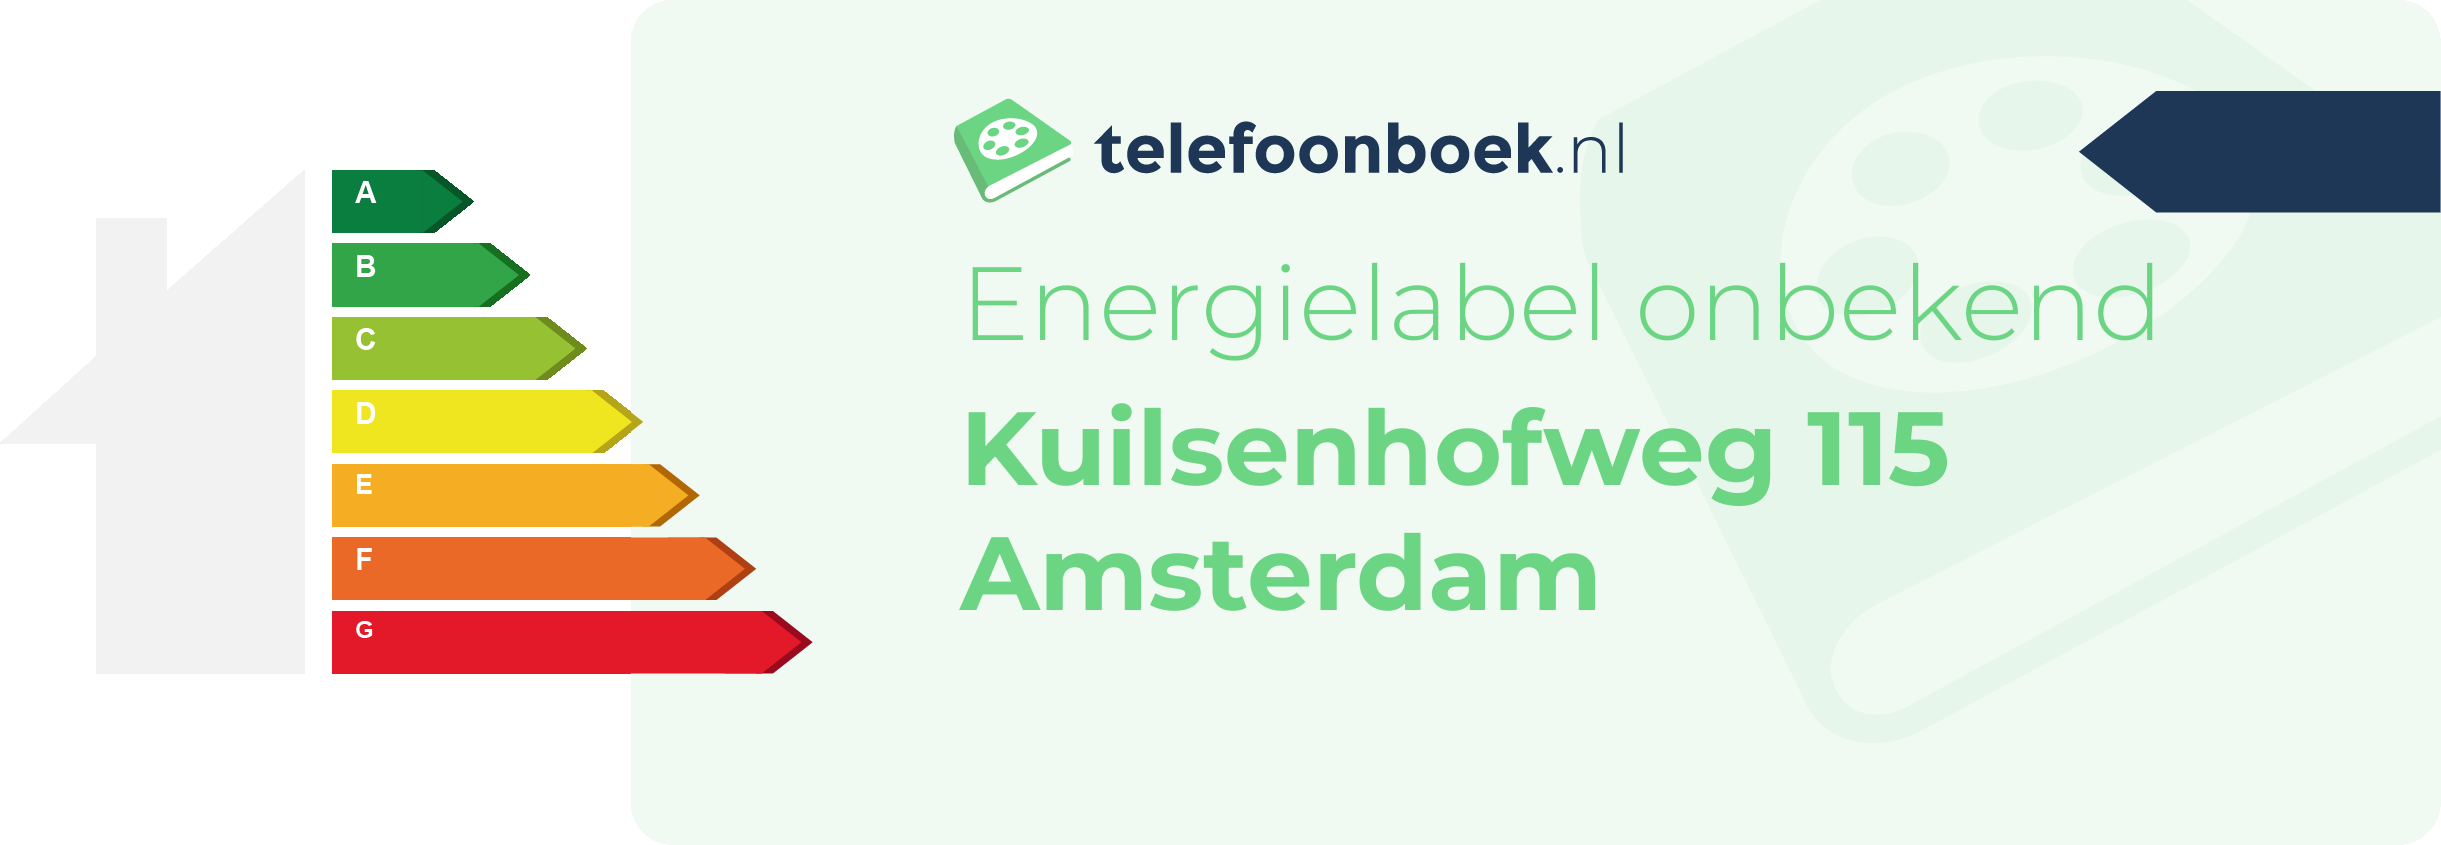 Energielabel Kuilsenhofweg 115 Amsterdam